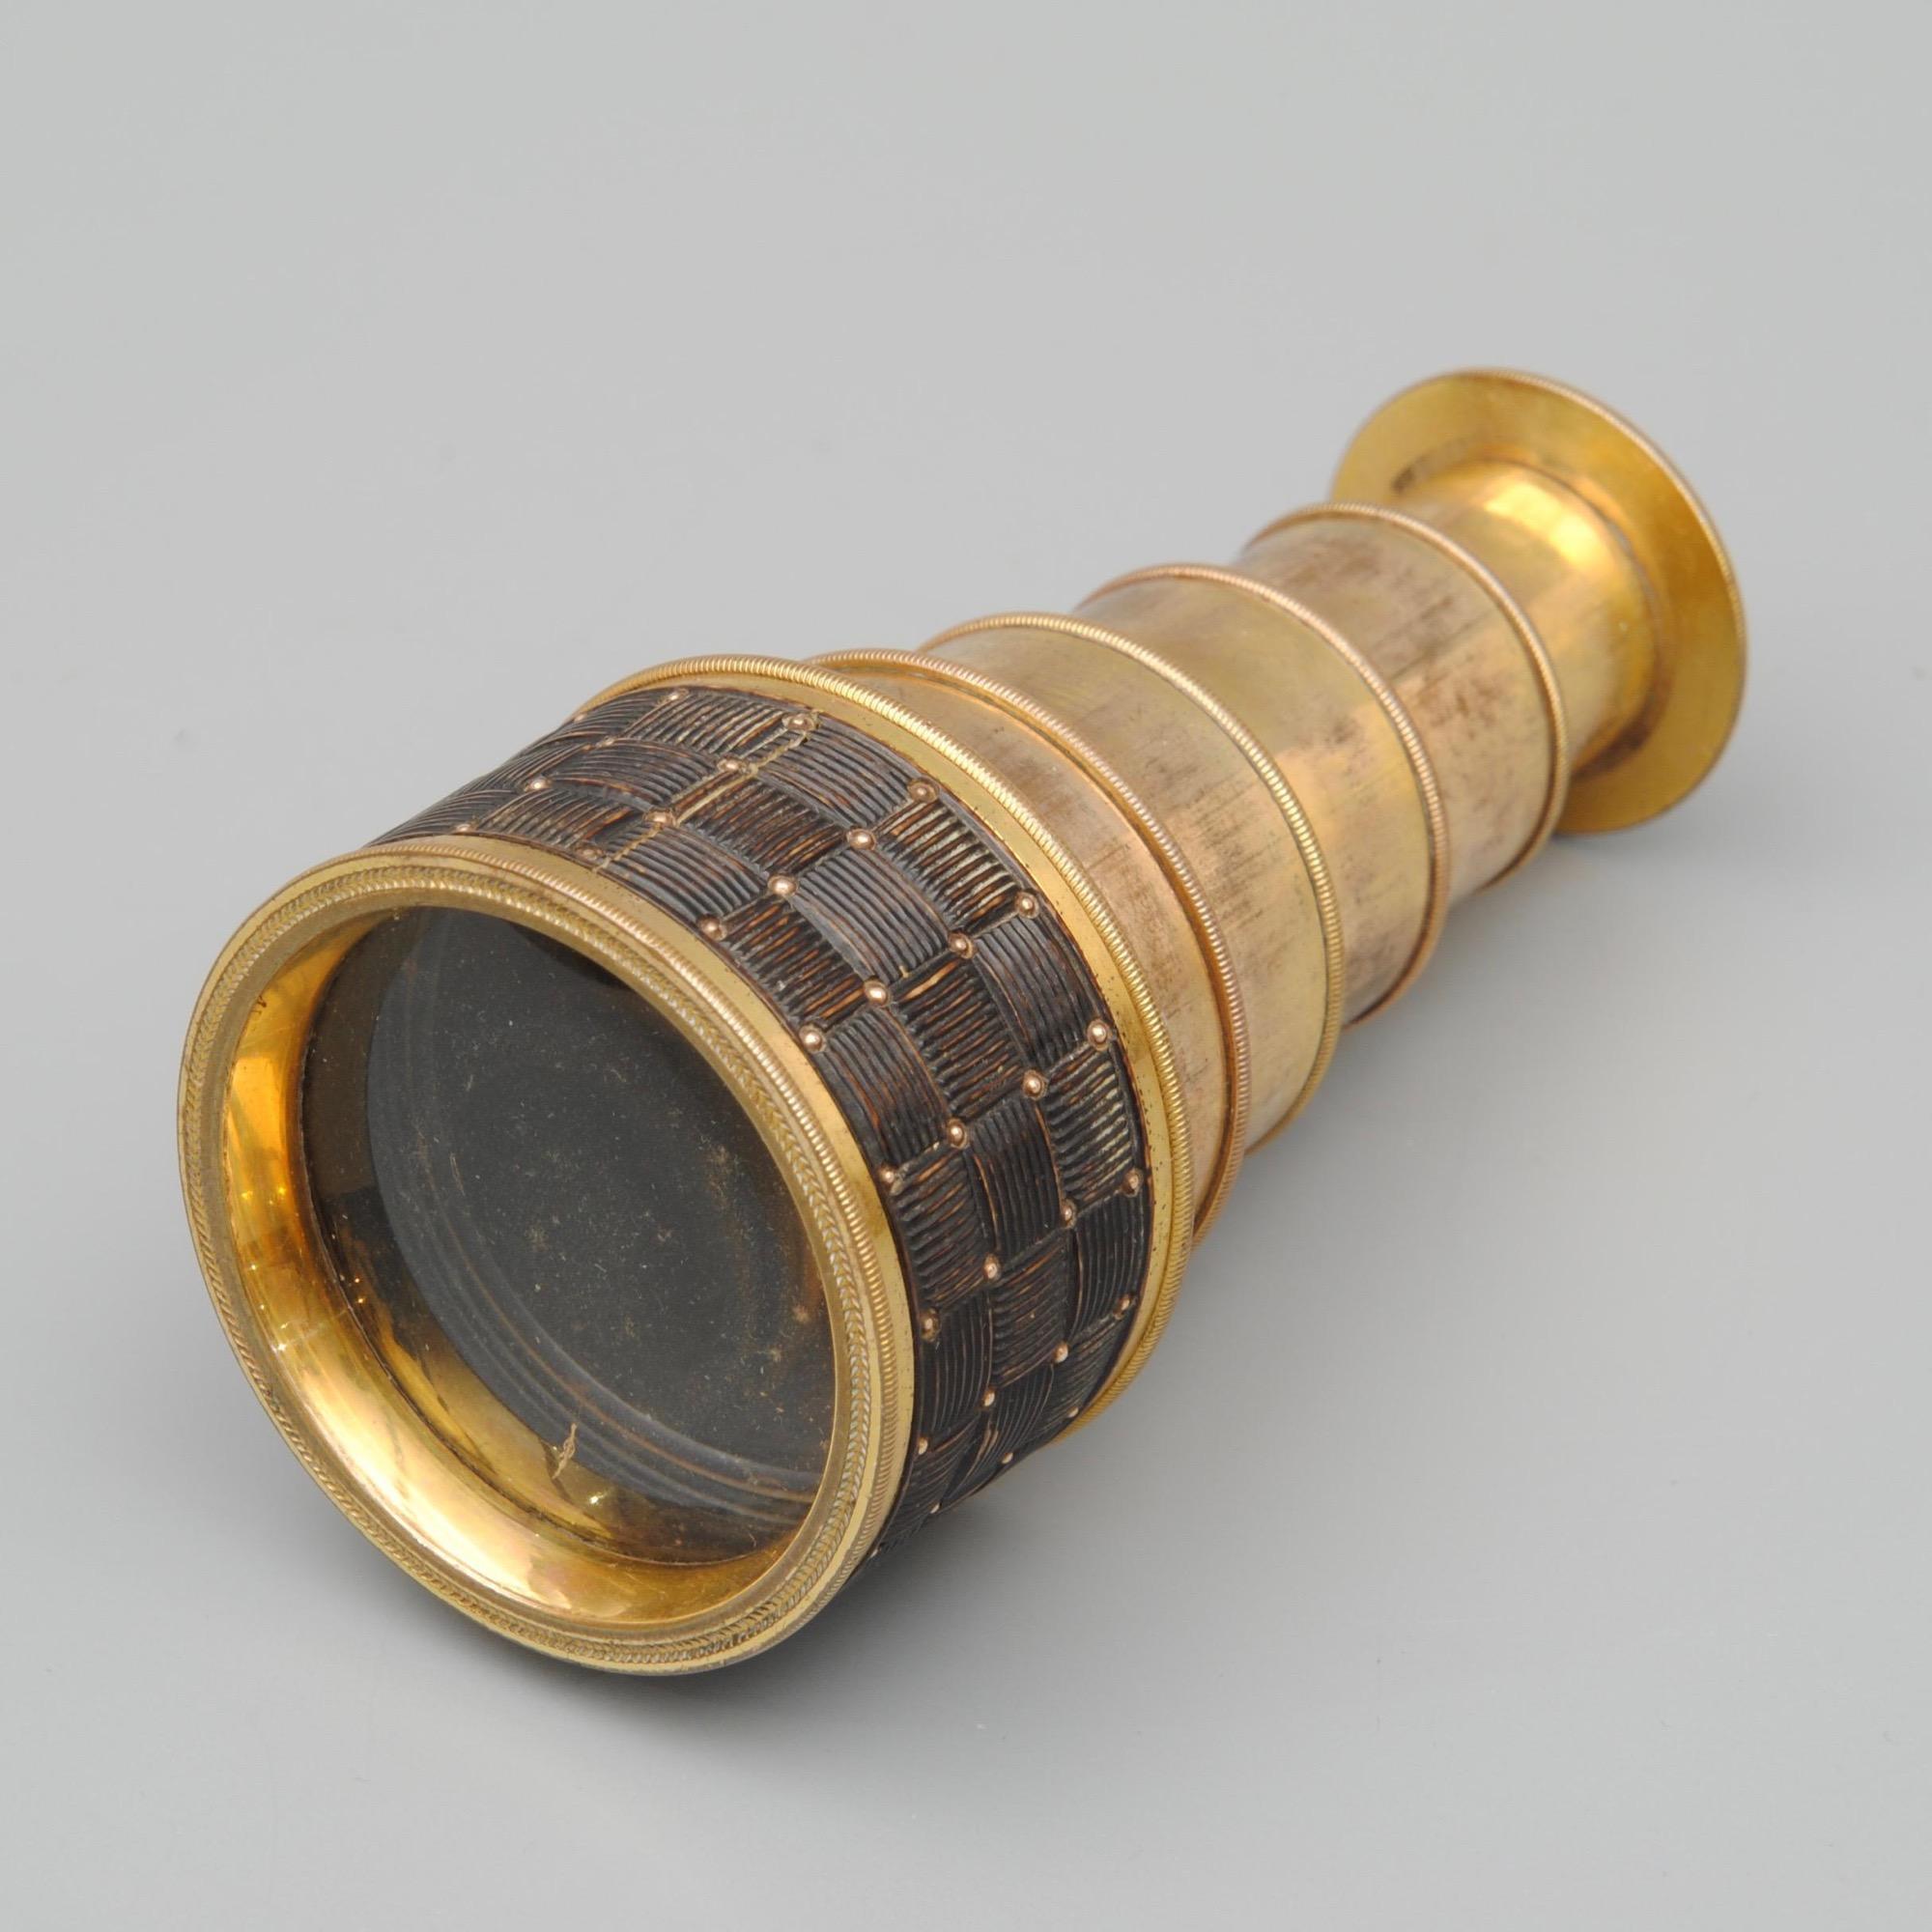 A fine Dolland spy glass telescope. Rare carved tortoiseshell around the main barrel. Signed around the eye piece

Circa 1820.